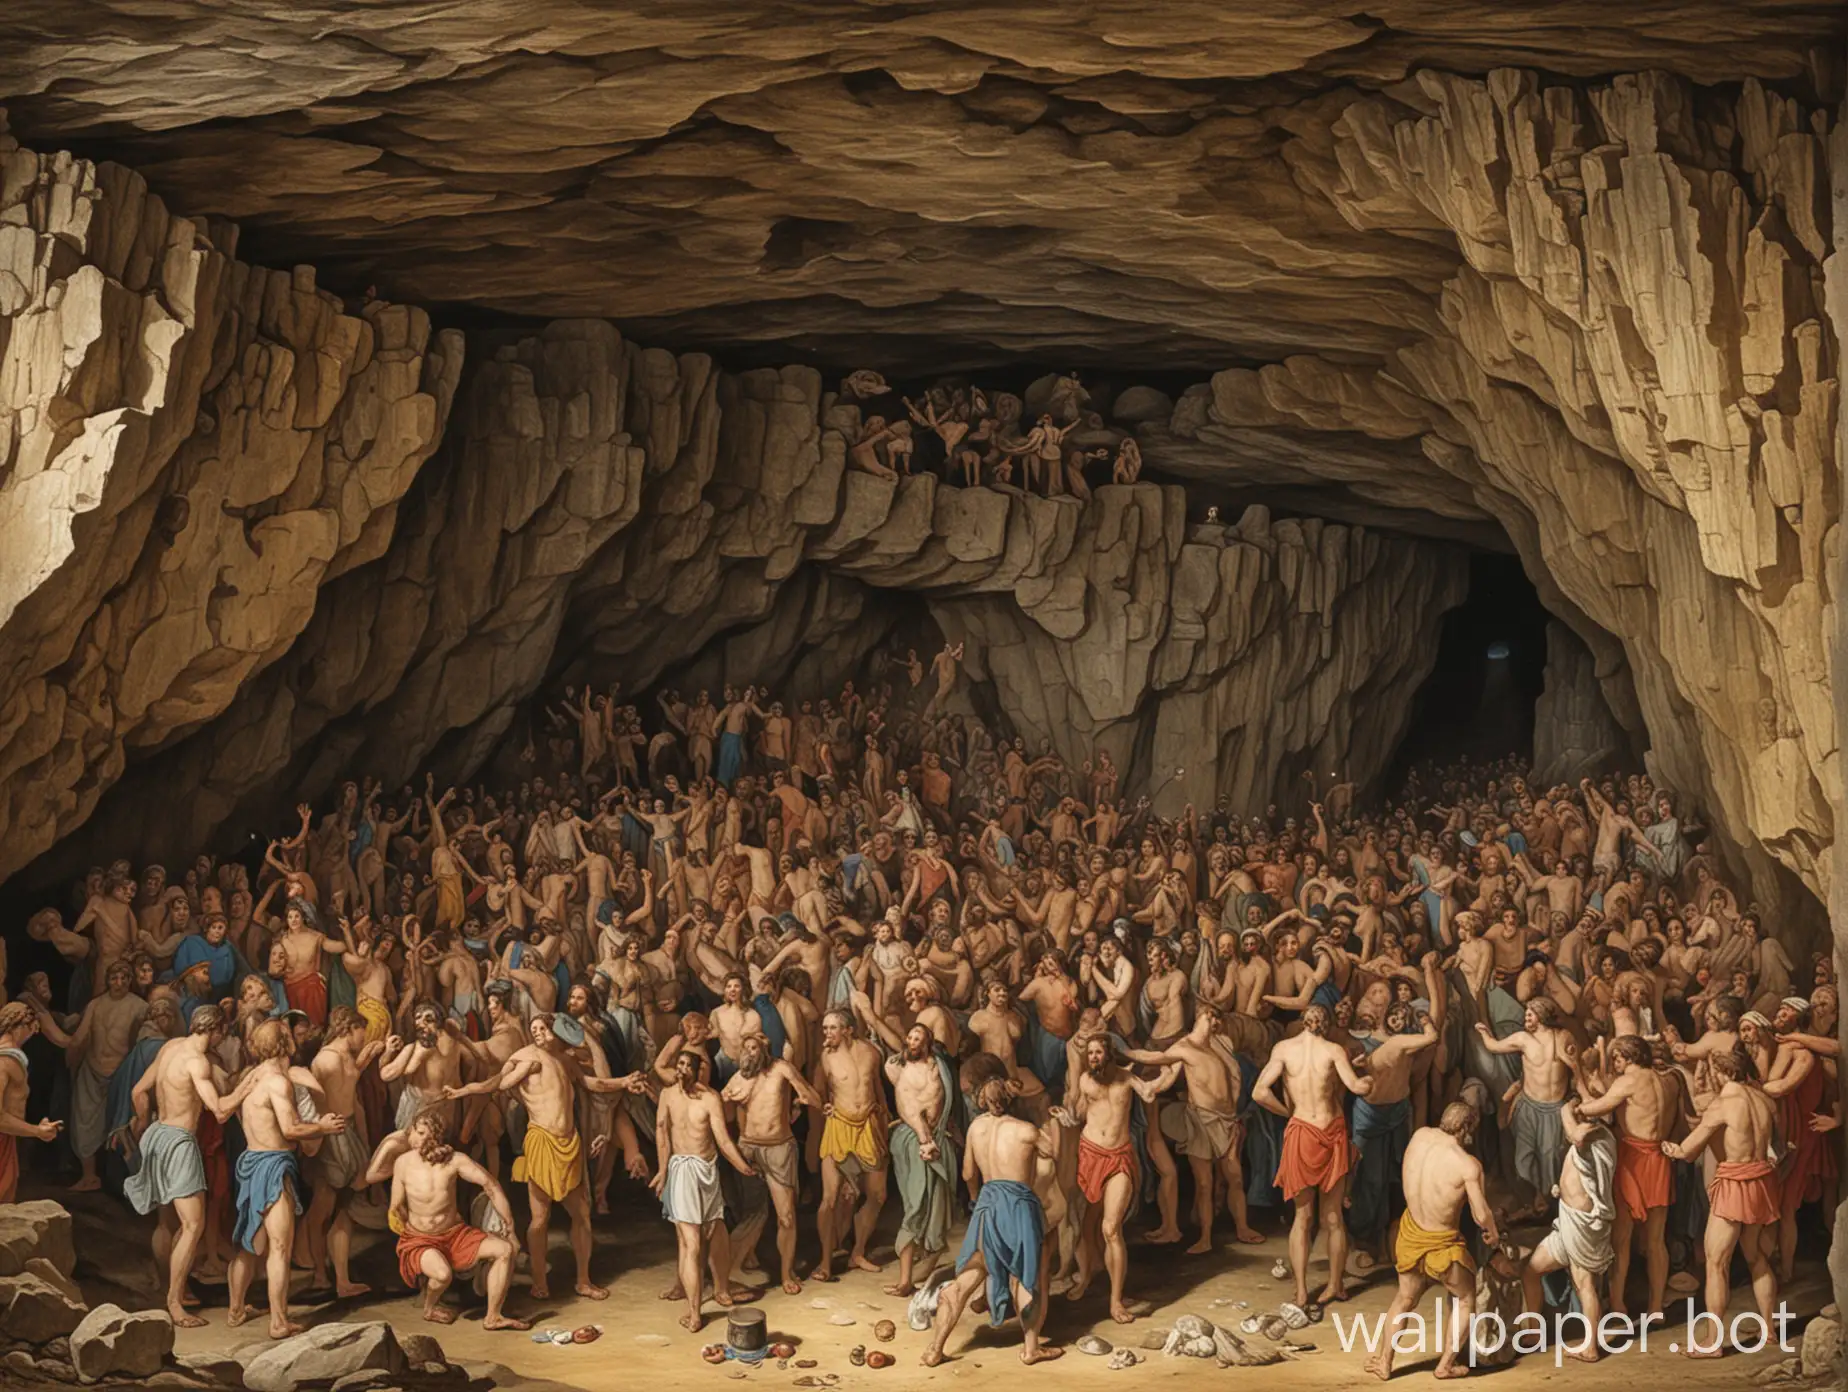 a party plato's cave